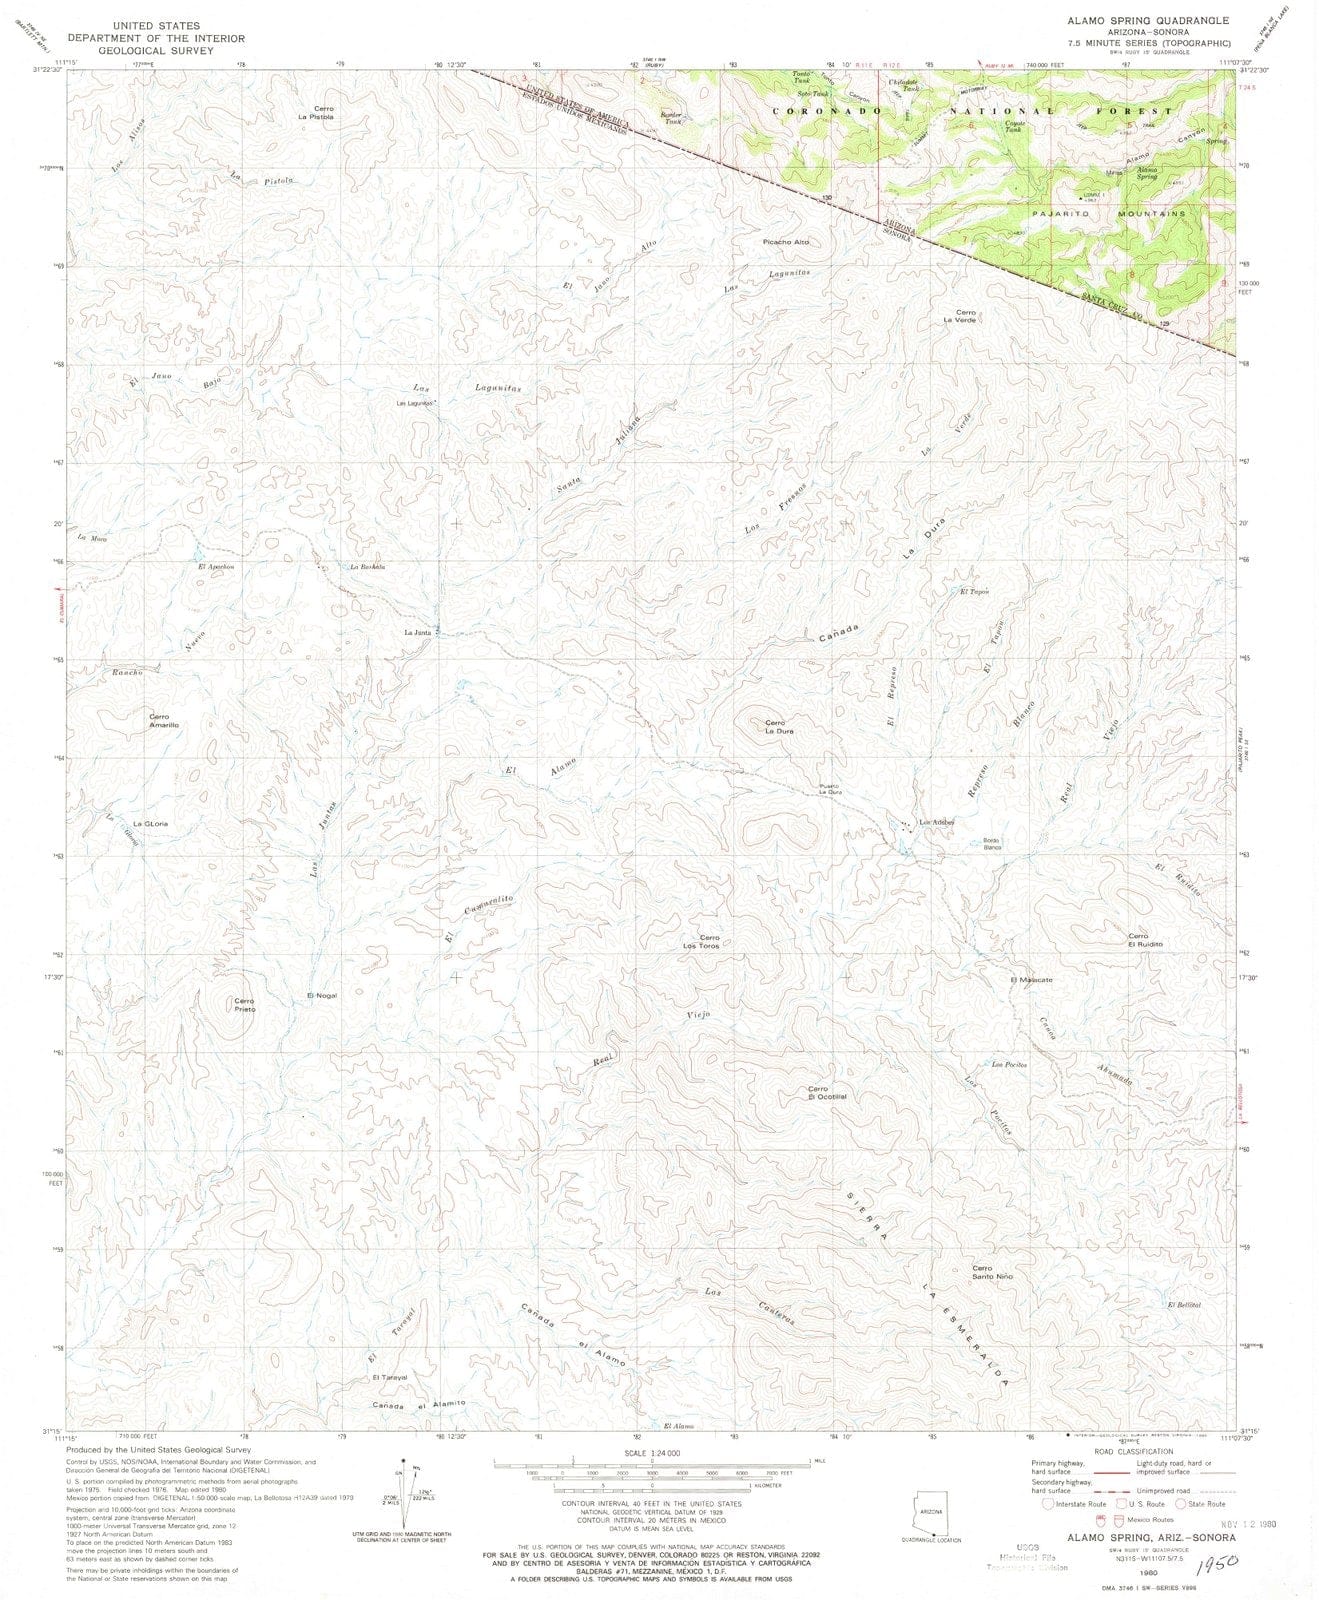 1980 Alamo Spring, AZ - Arizona - USGS Topographic Map